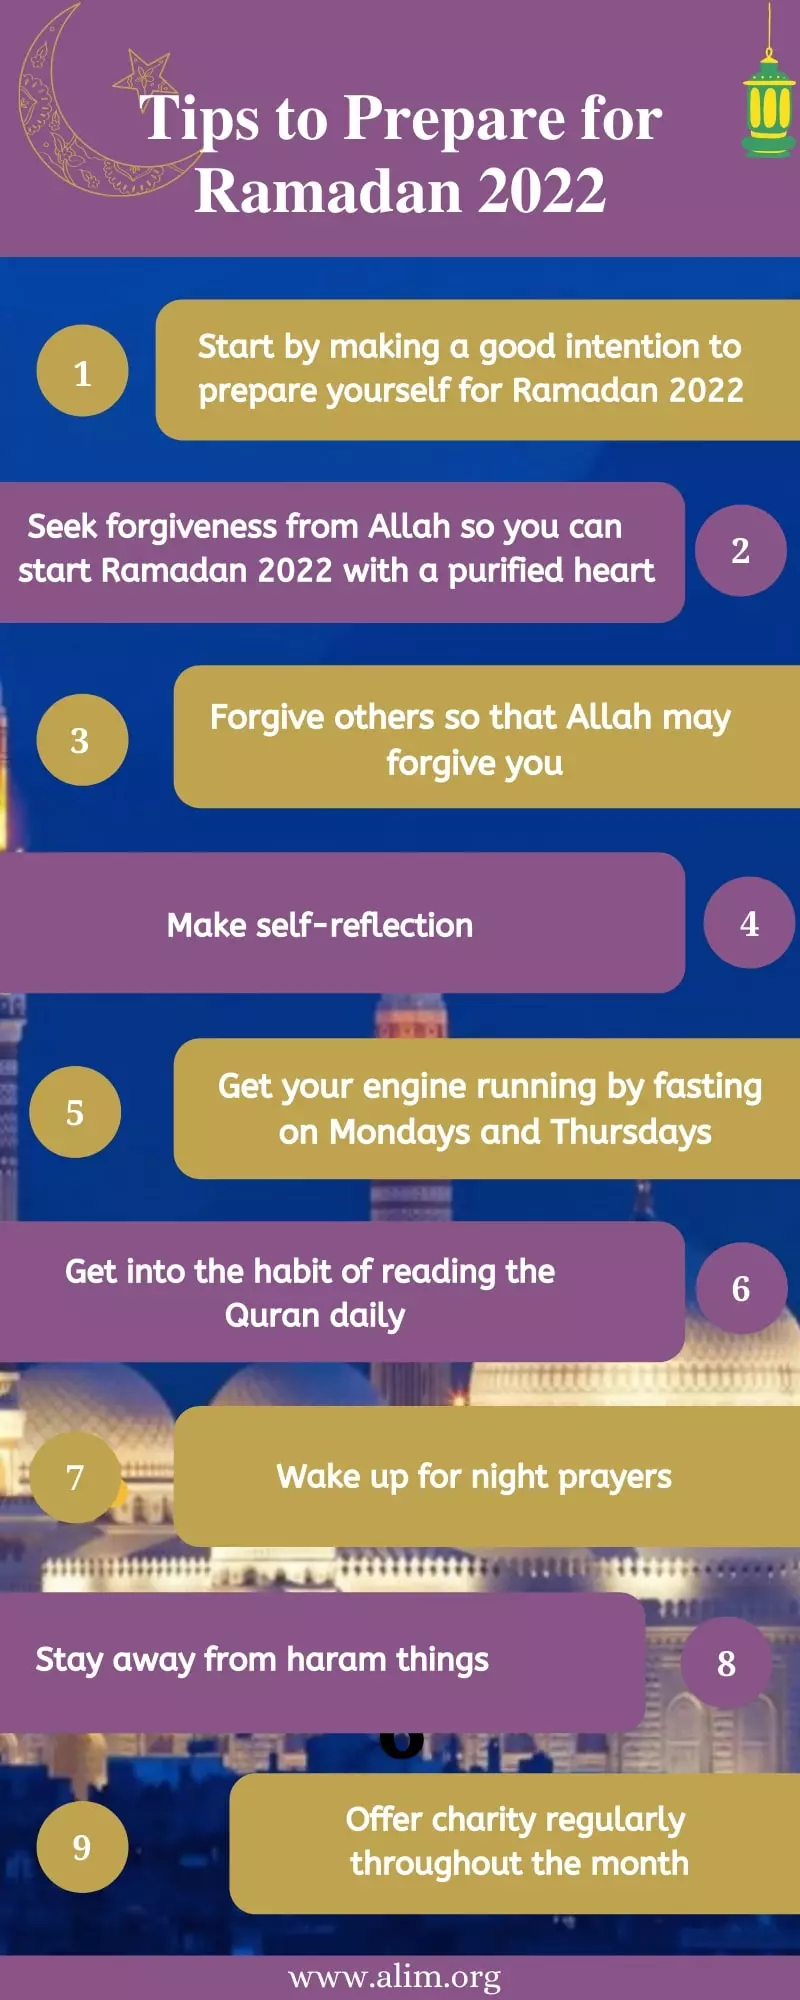 Tips to prepare for Ramadan 2022